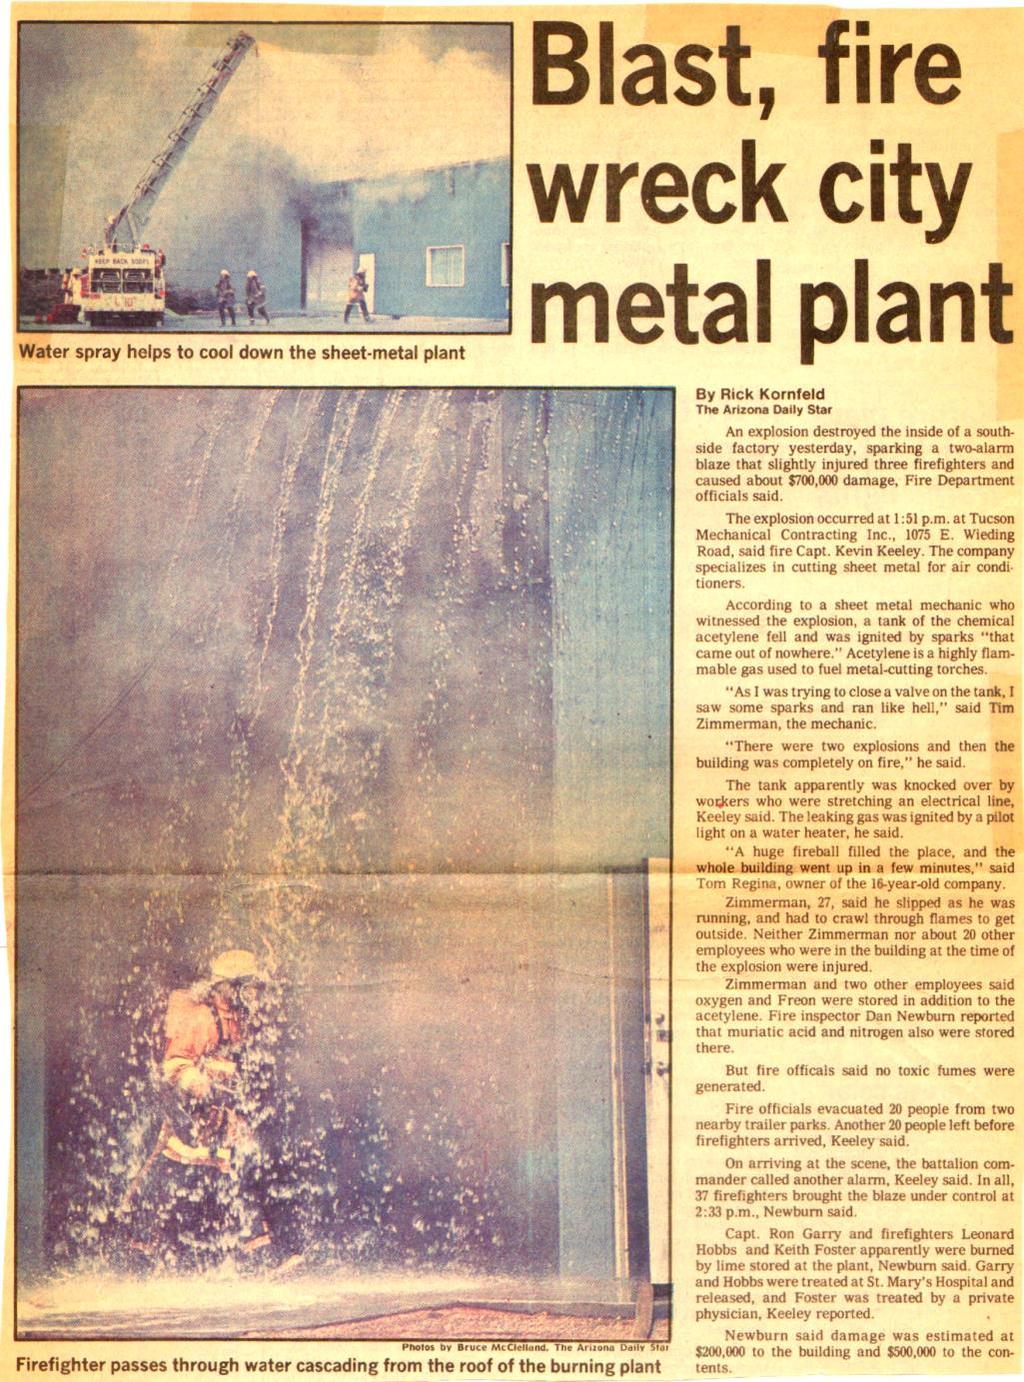 4/16/1985, Tucson Mechanical Contracting, Inc.